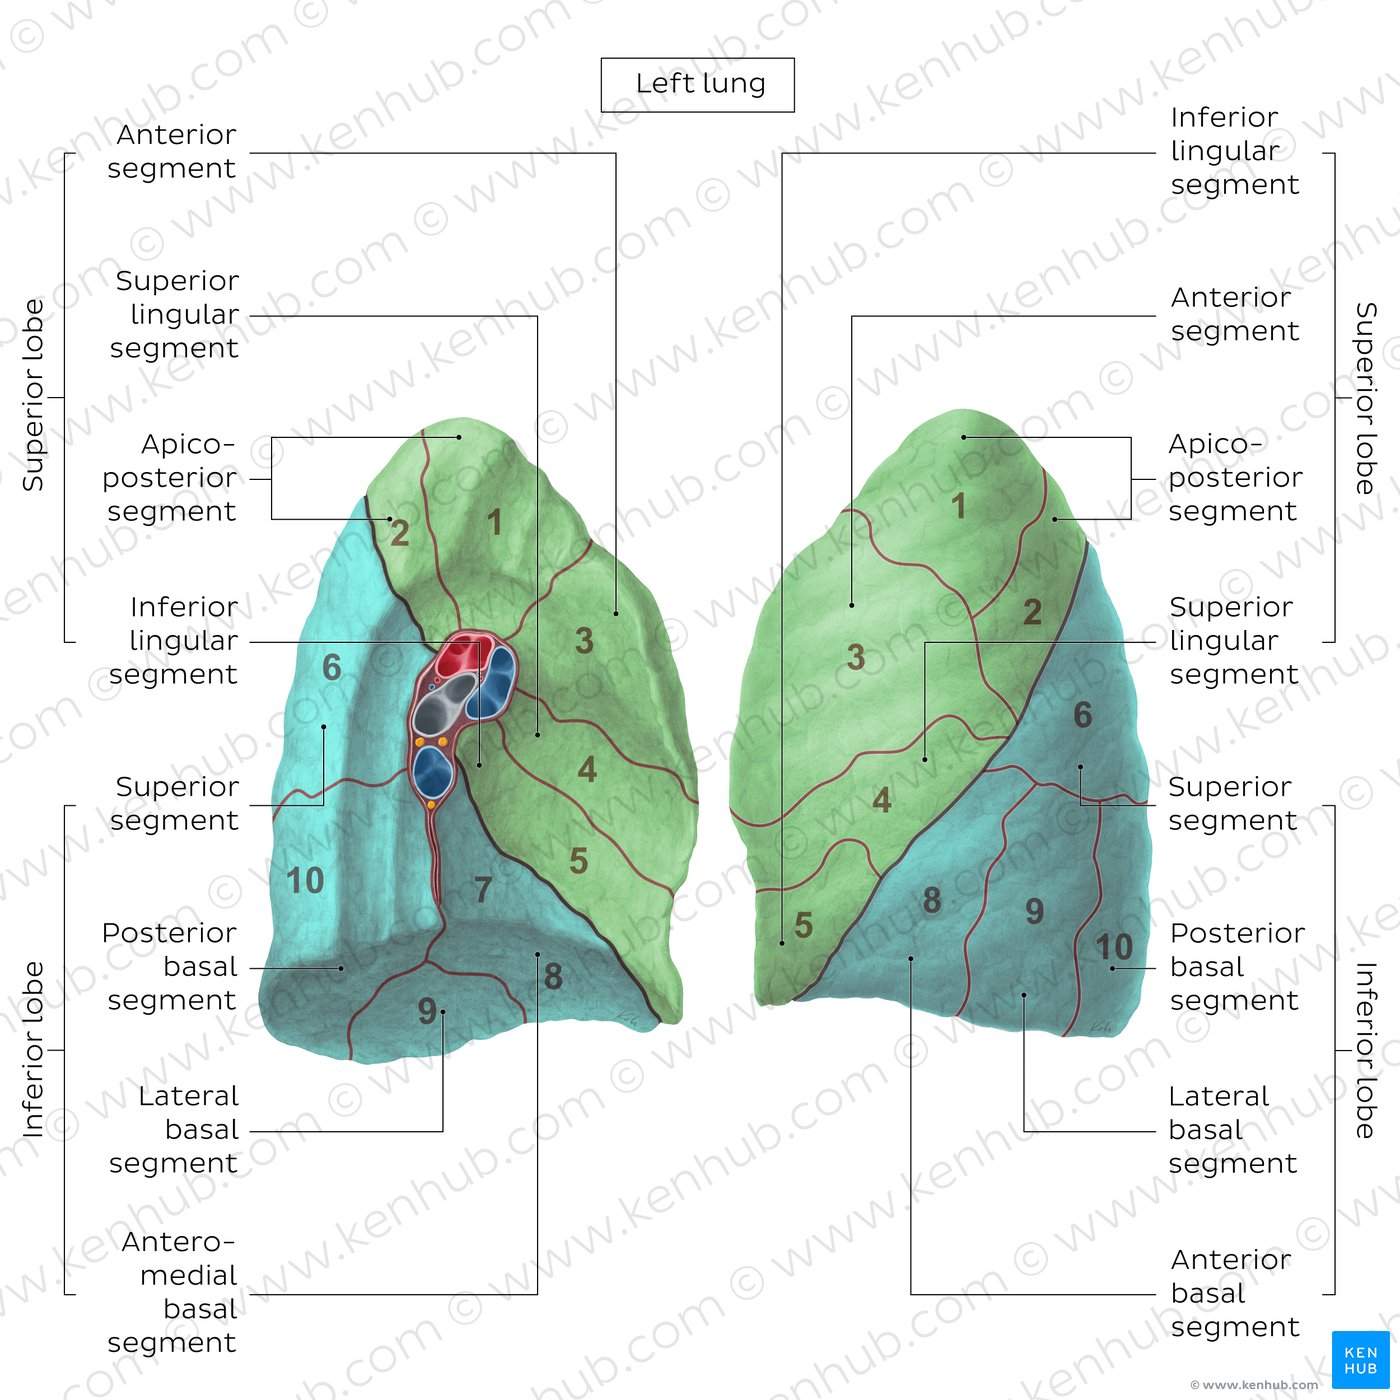 Bronchopulmonary segments (Left lung)